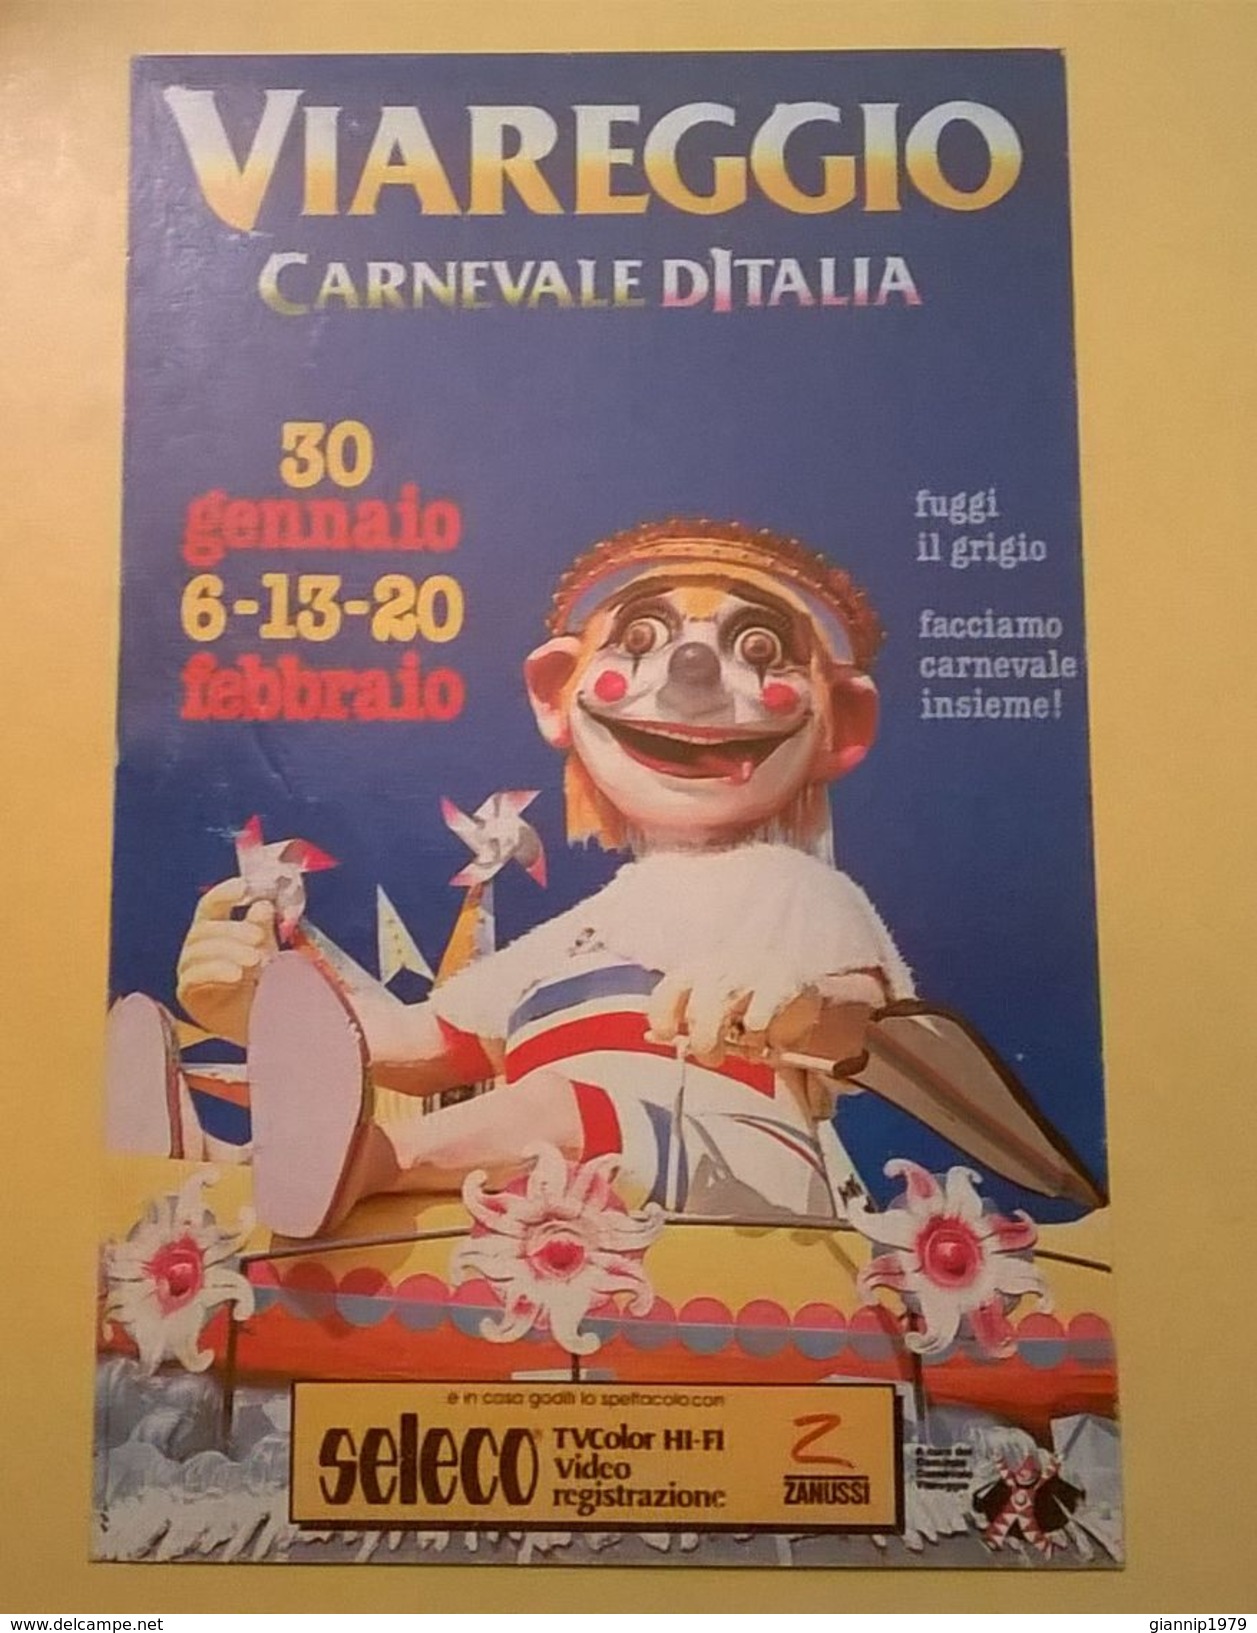 CARTOLINA POSTCARD NUOVA CARNEVALE VIAREGGIO 1983 RARITA' - Viareggio